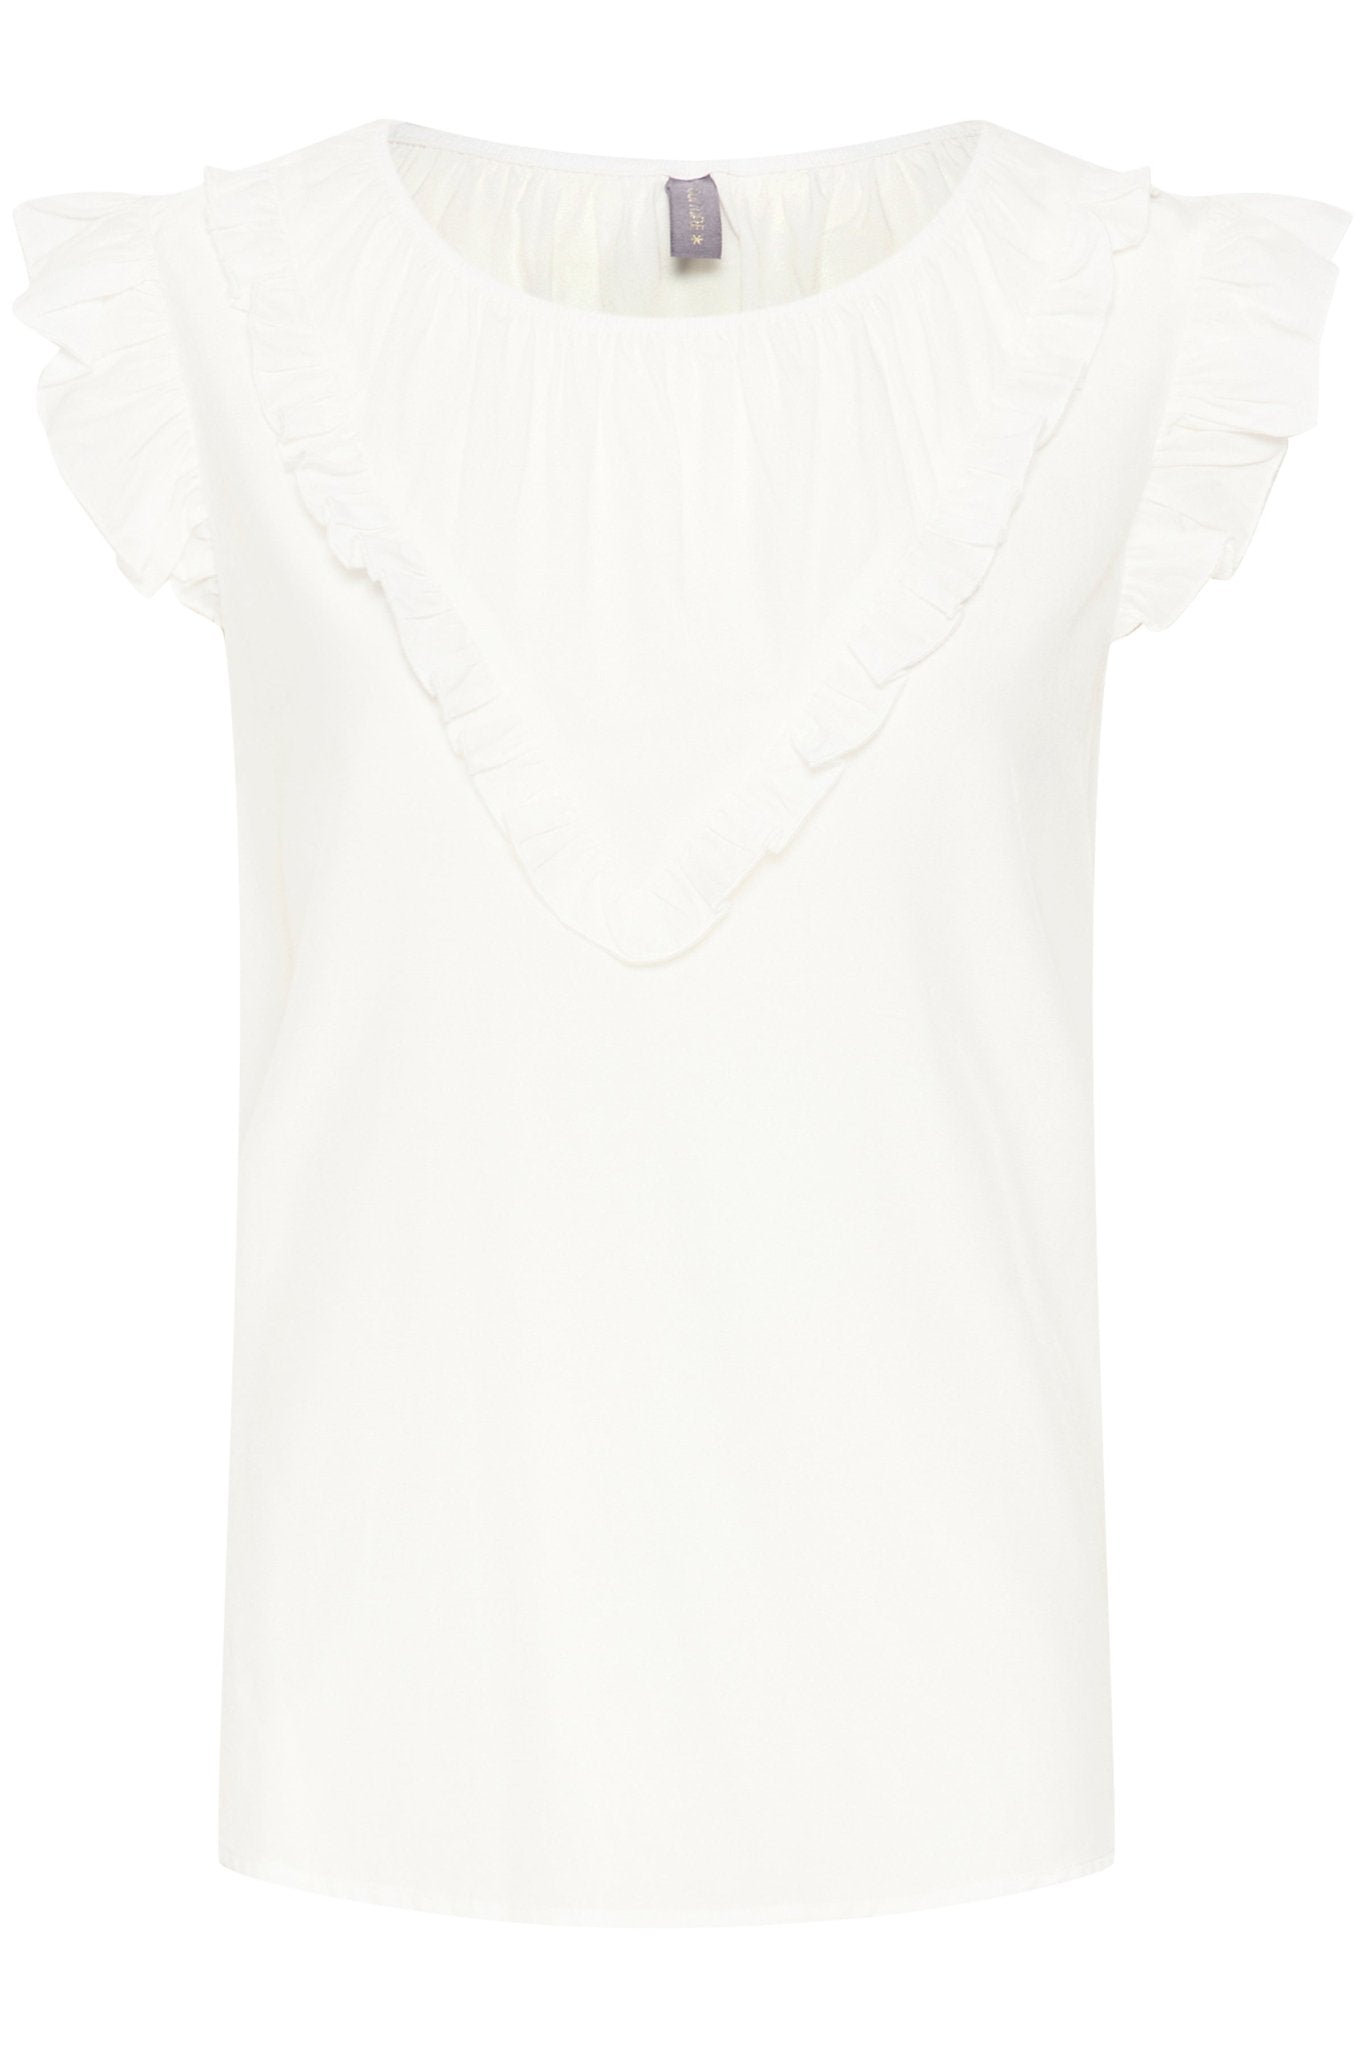 Asmine short sleeve blouse by Culture - Gardenia - Blue Sky Fashions & Lingerie